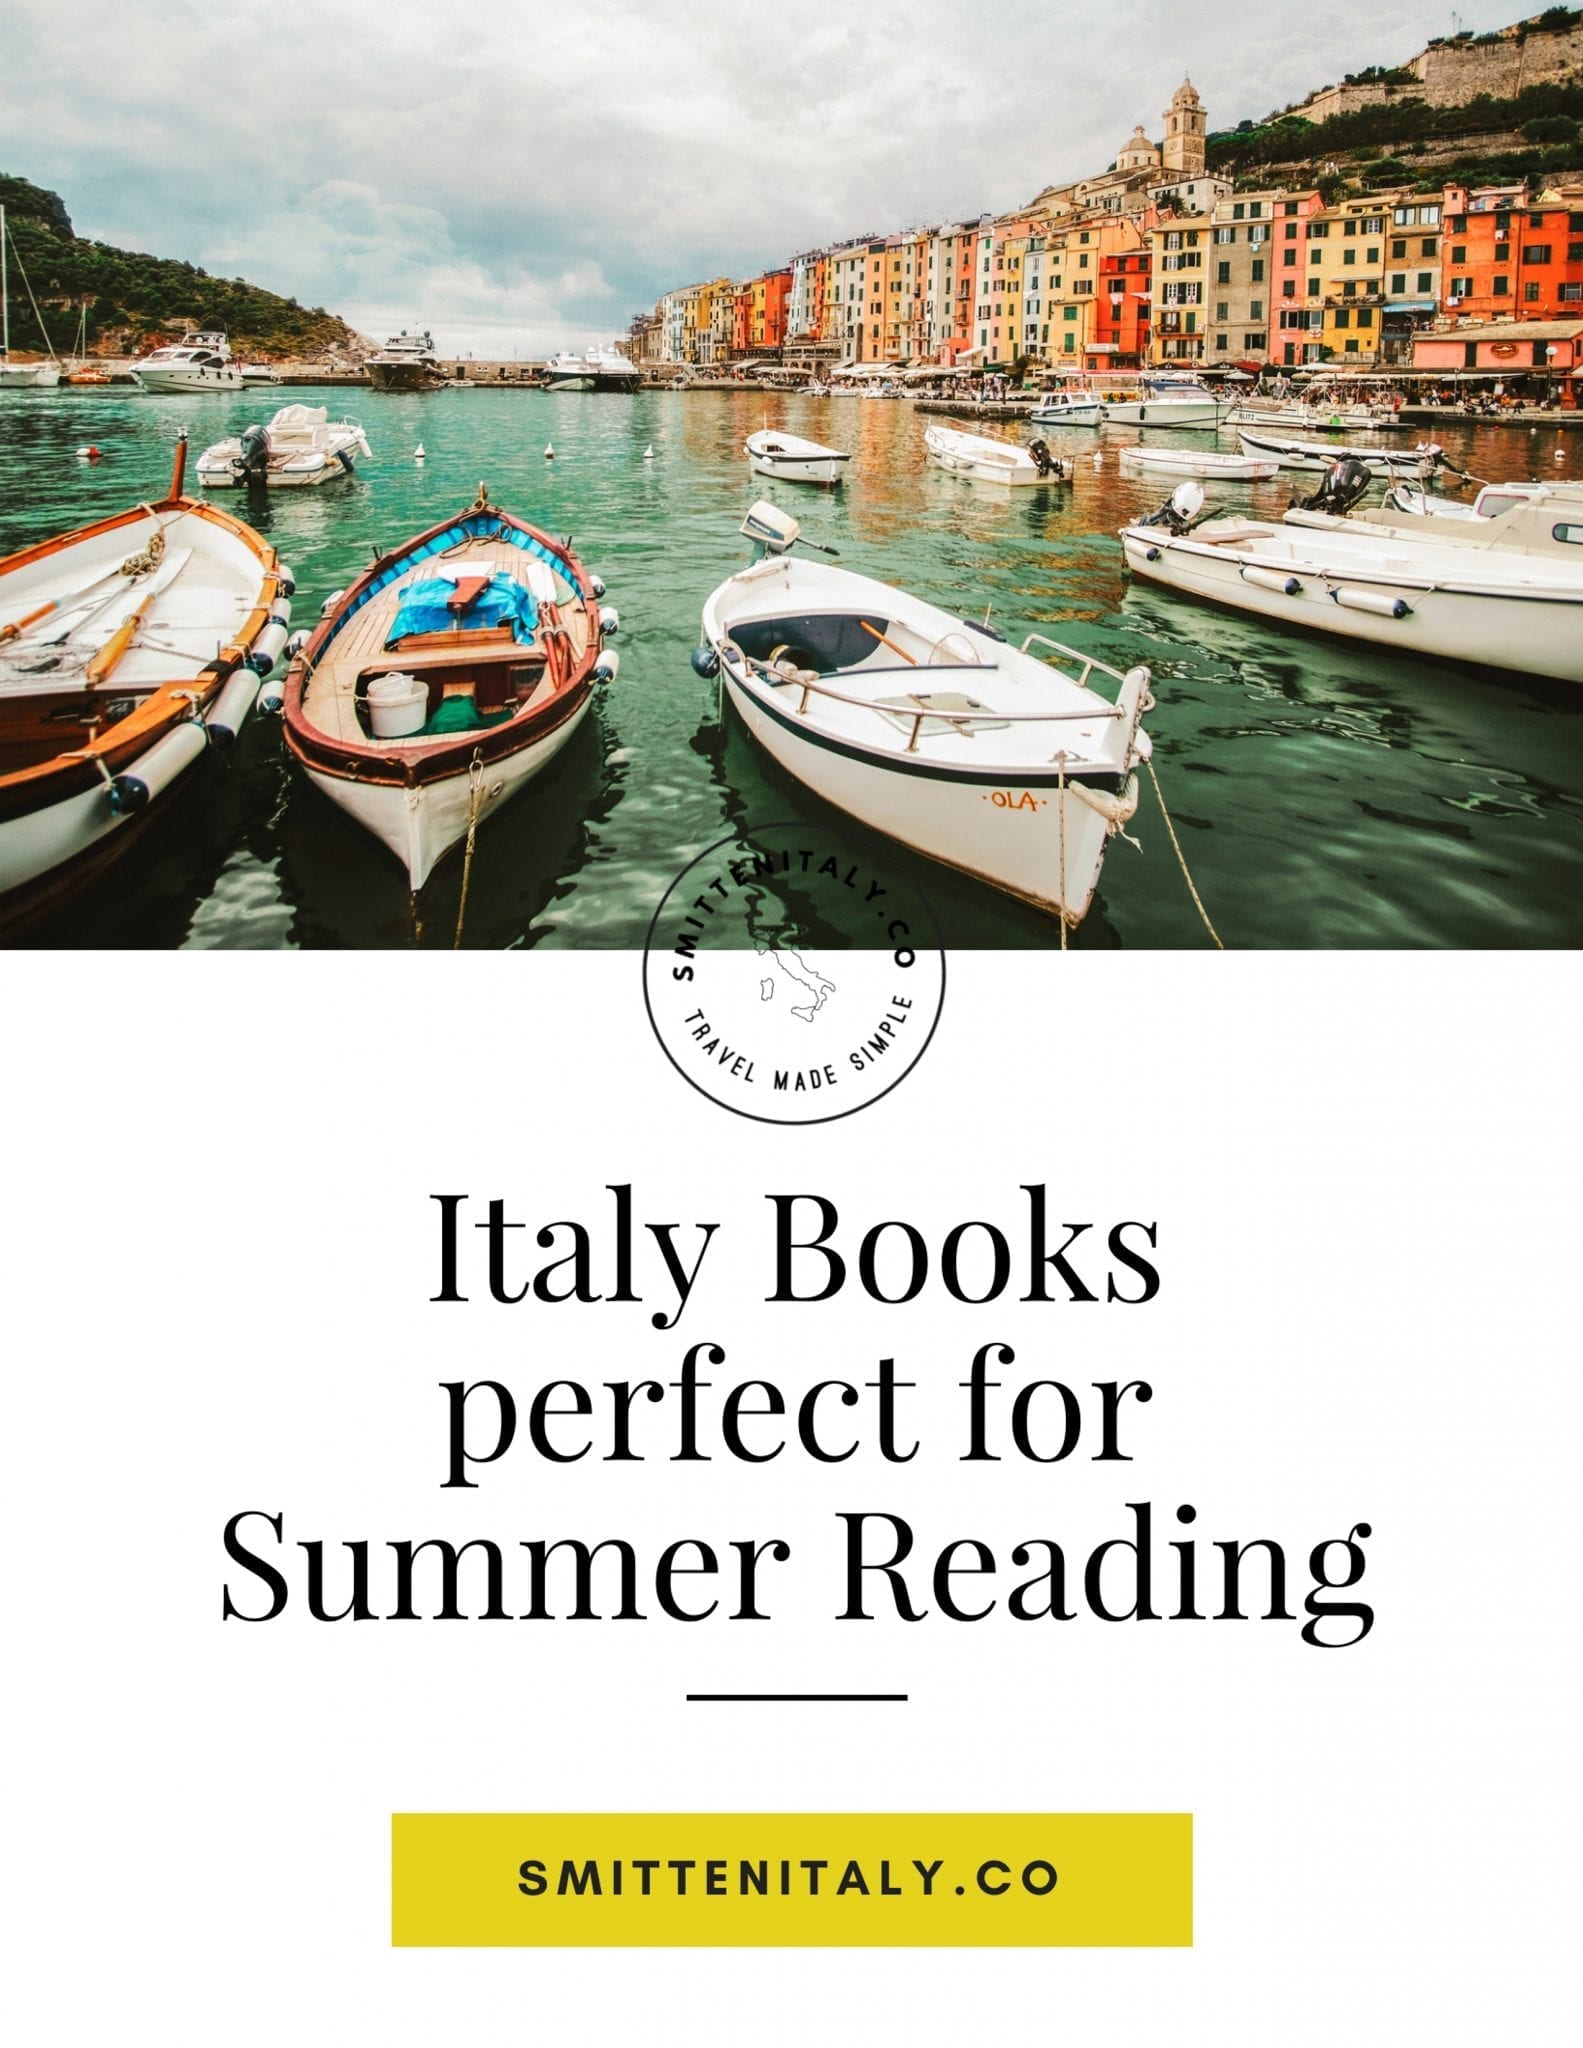 Best Italy Books for Summer Reading